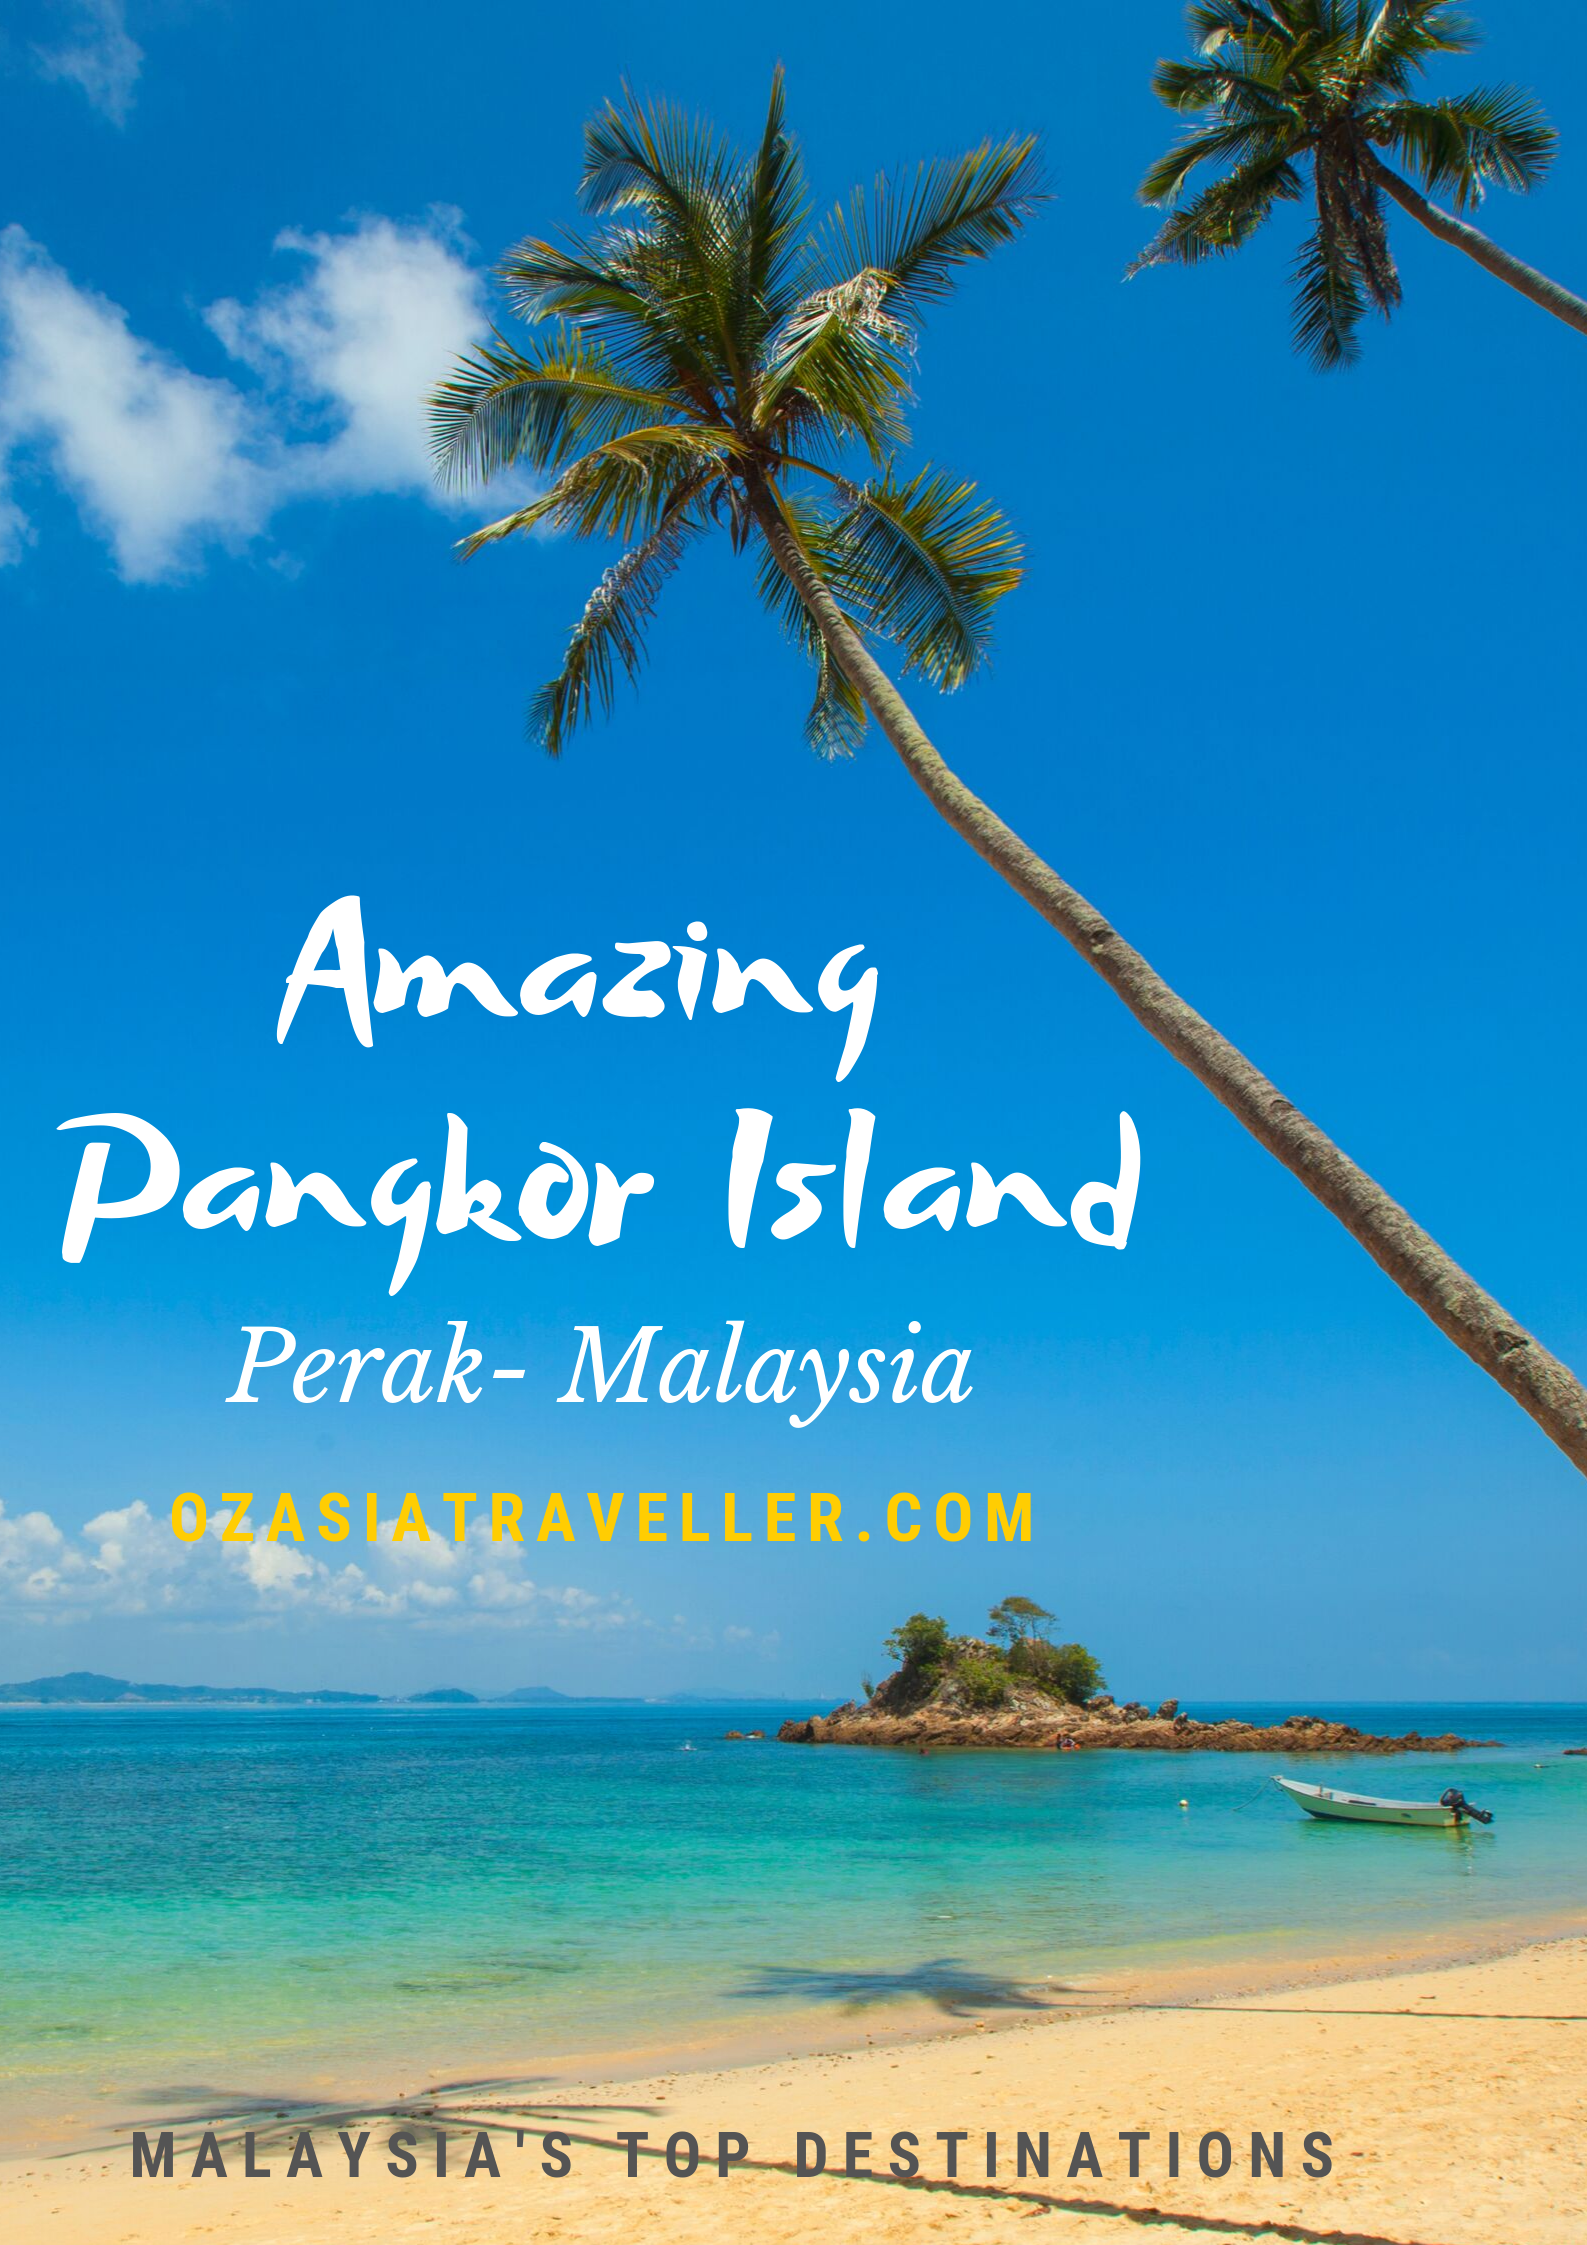 Pangkor Island Perak